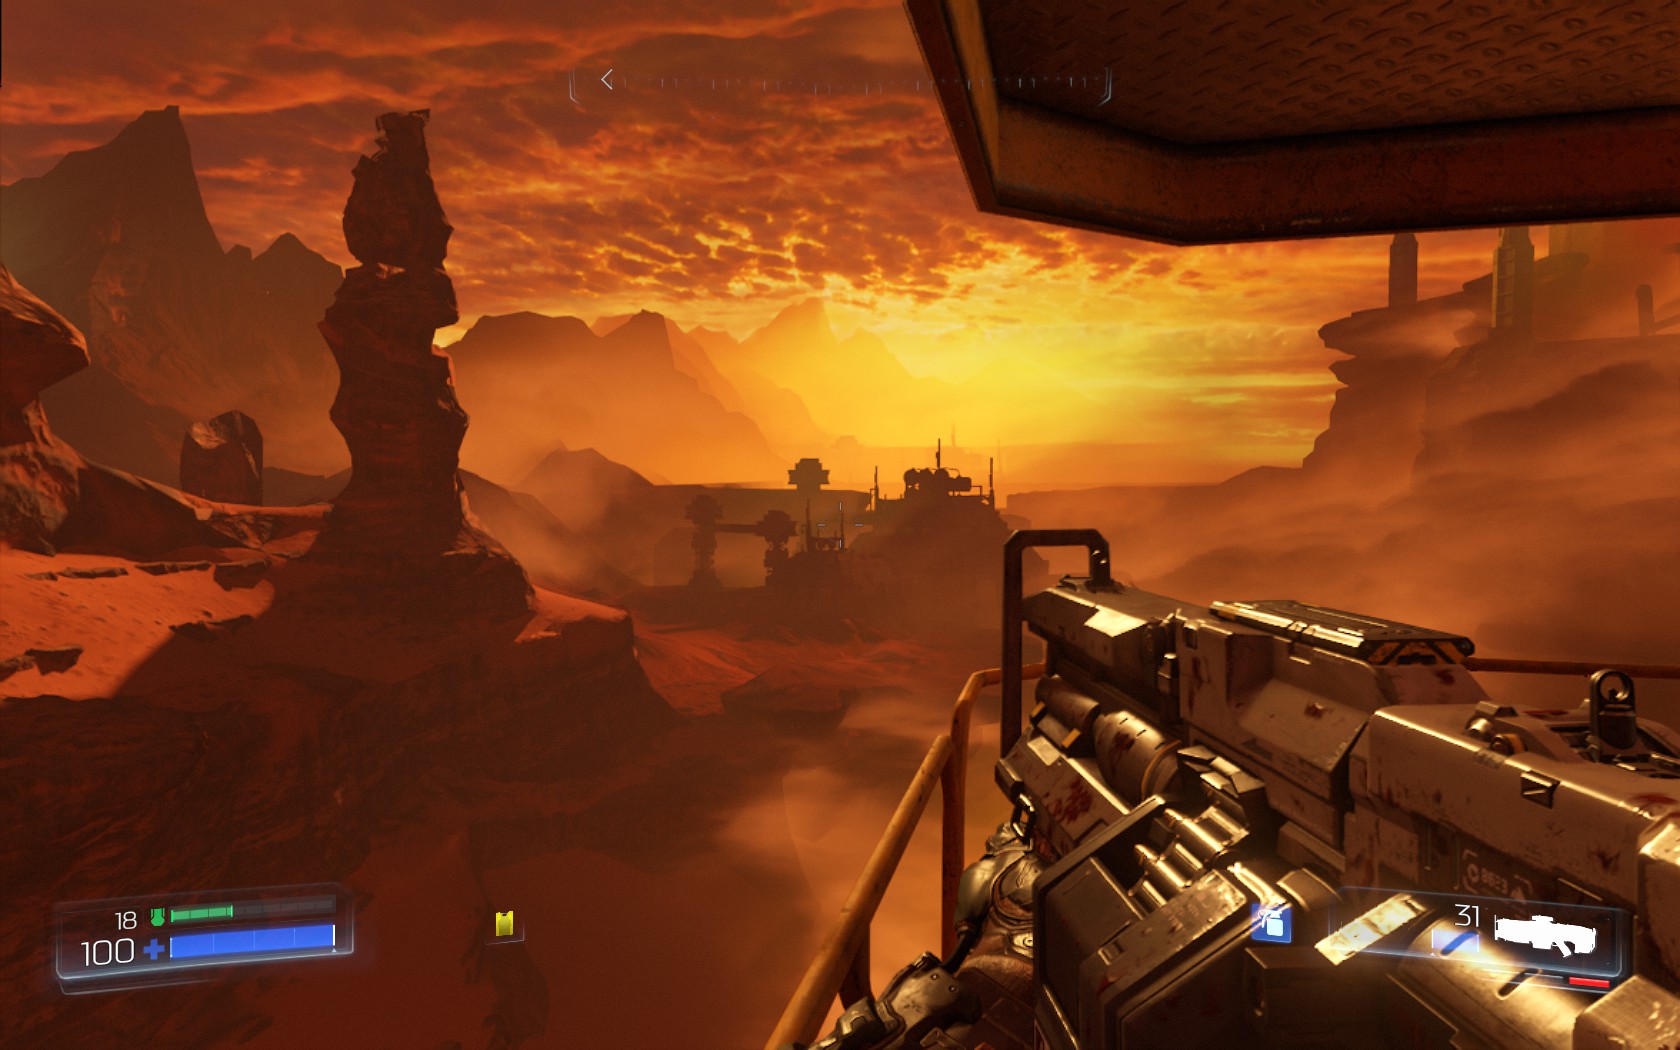 Doom 3 Demo Vista Stopped Working